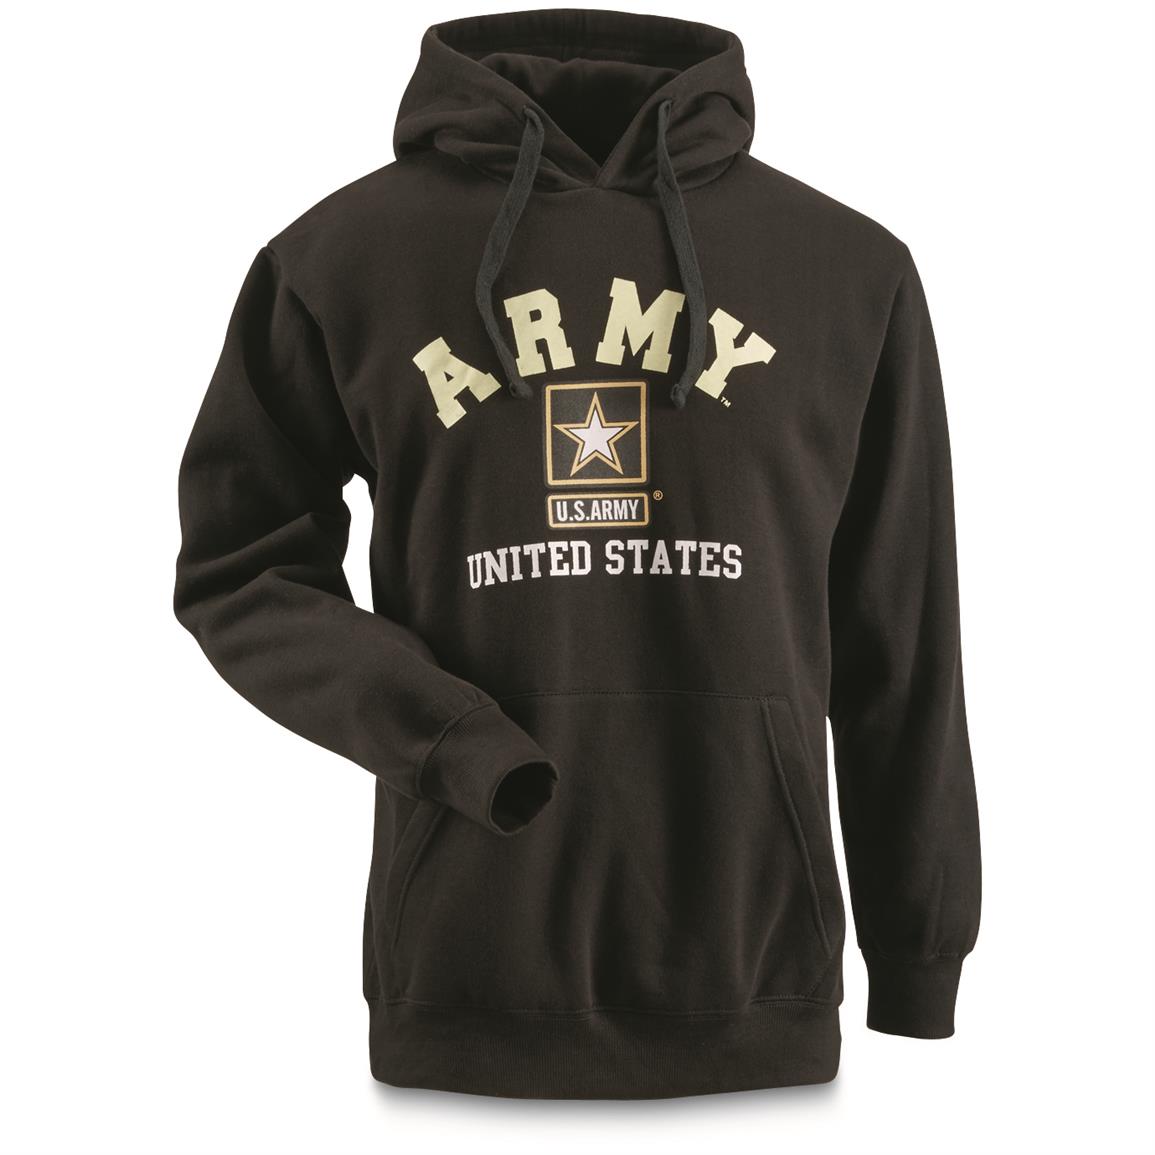 U.S. Army Military Surplus IPFU Hooded Sweatshirt, New